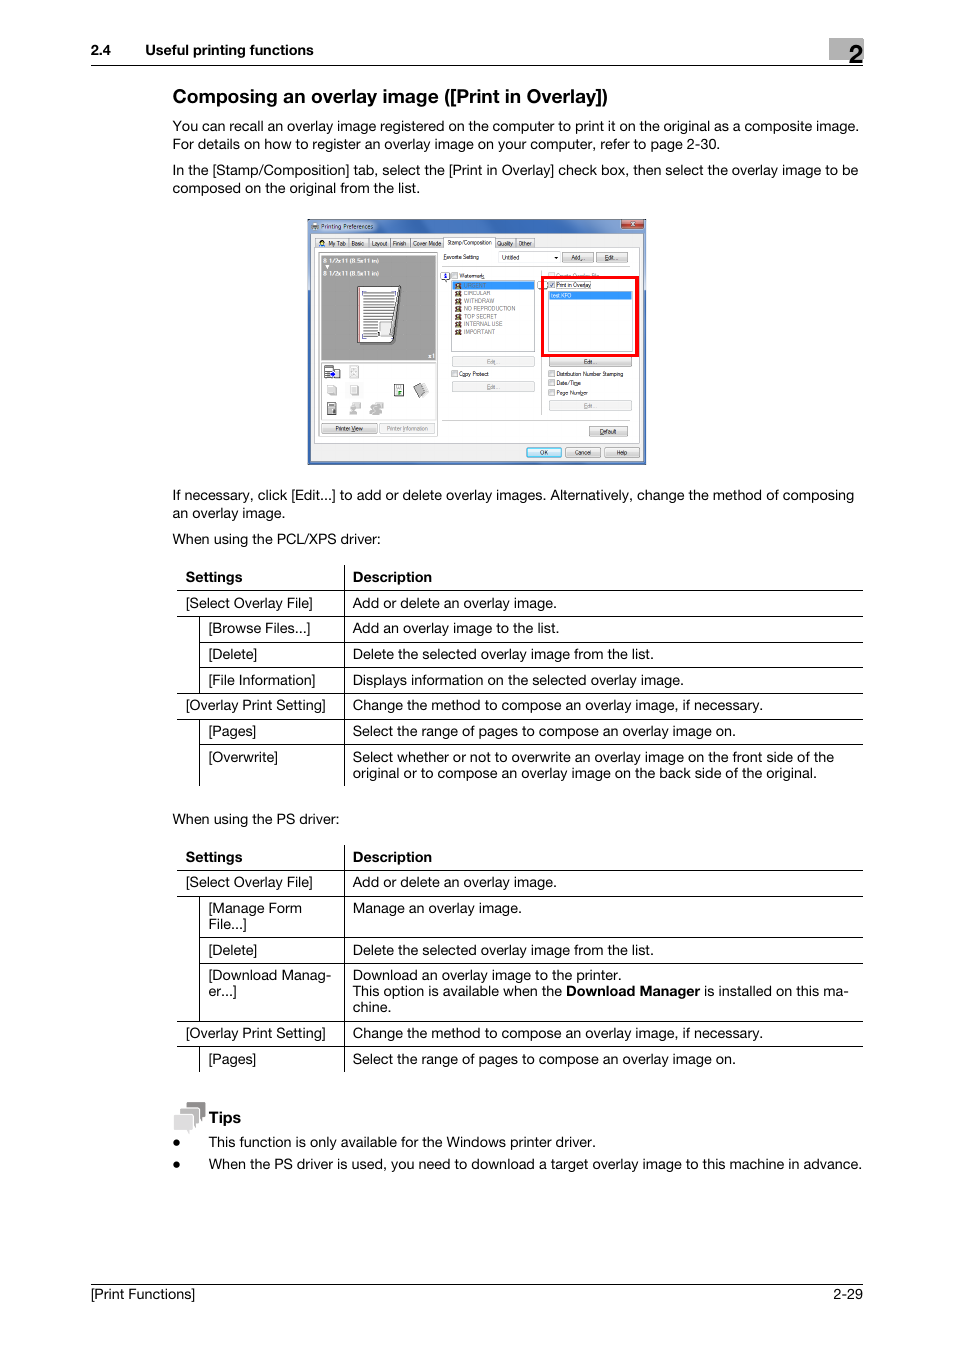 Composing an overlay image ([print in overlay]) | Konica Minolta bizhub 4050 User Manual | Page 39 / 115